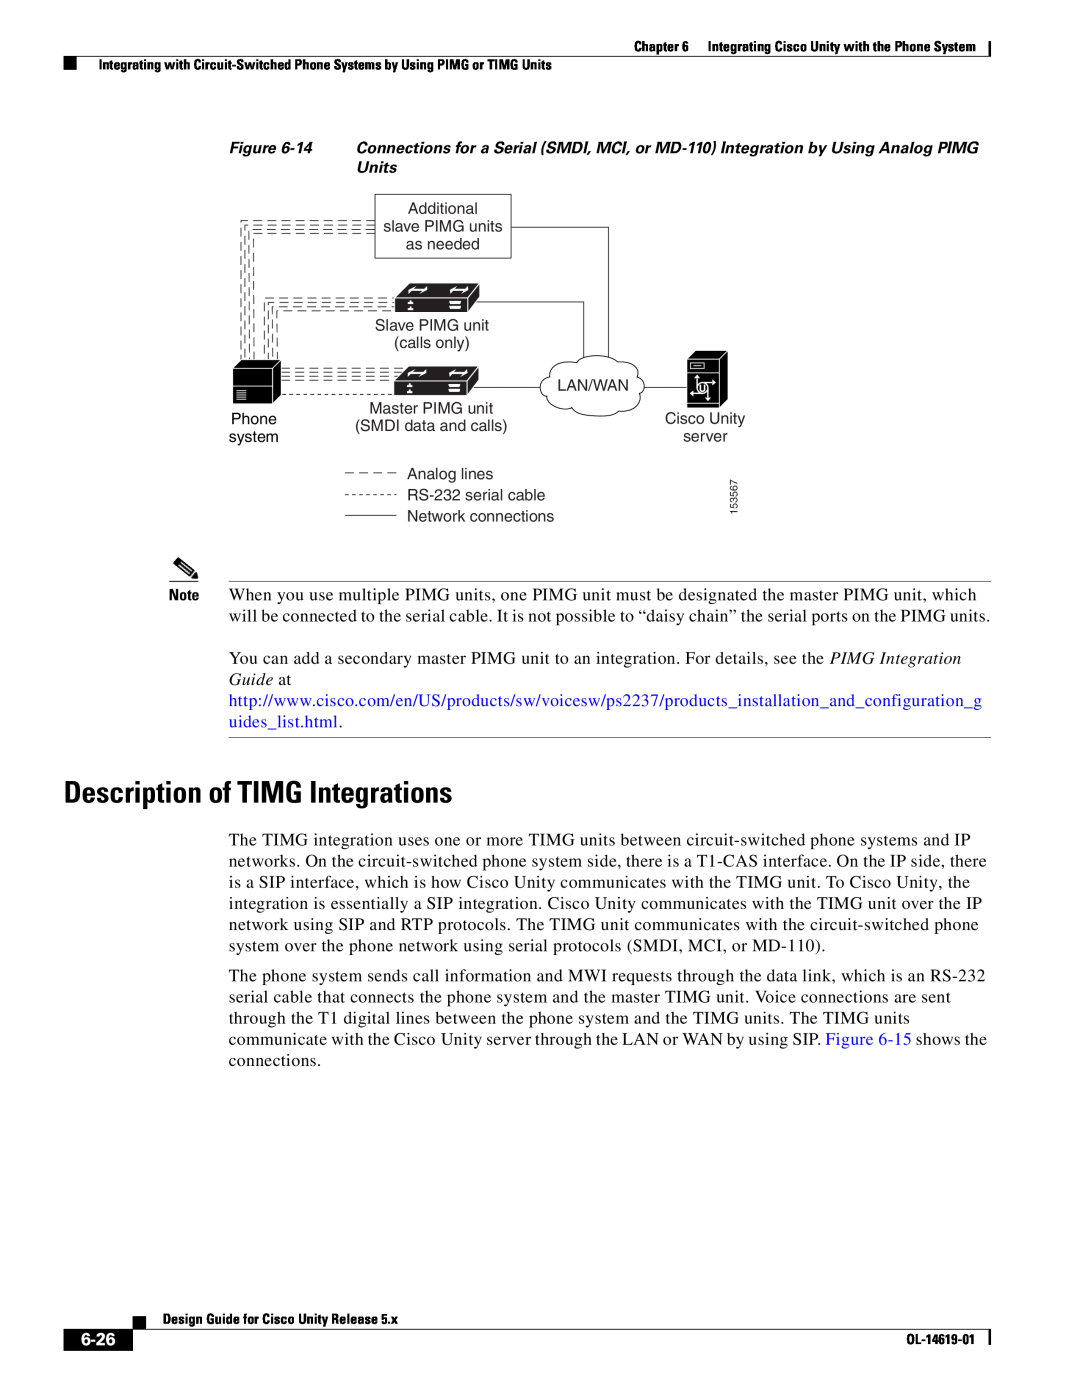 Cisco Systems OL-14619-01 manual Description of TIMG Integrations, 6-26 